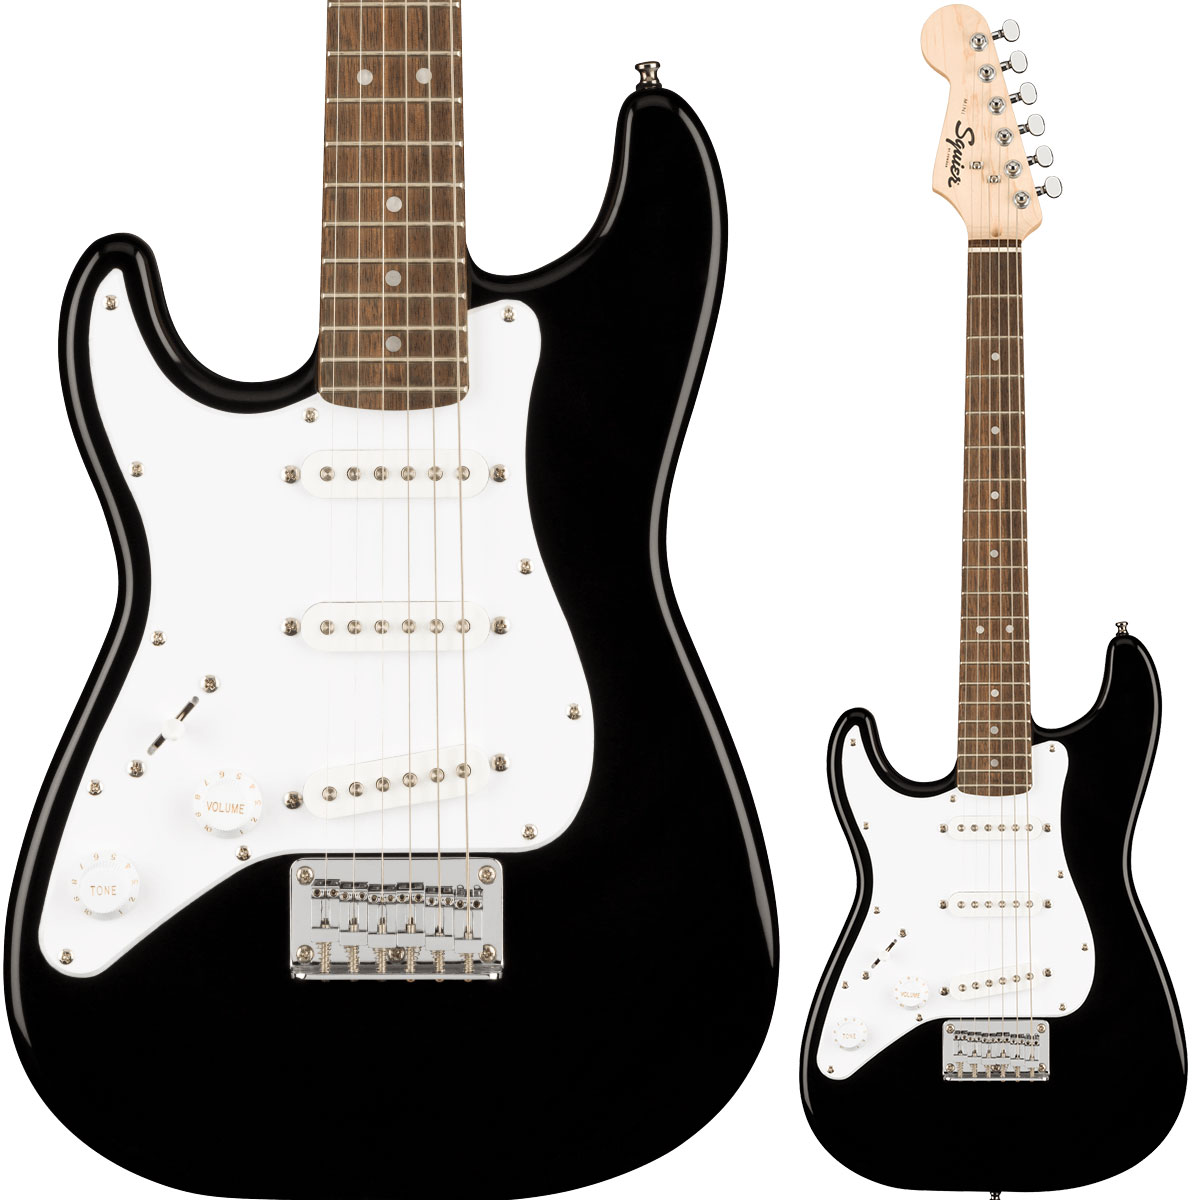 Squier by Fender Mini Stratocaster Left-Handed Laurel Fingerboard